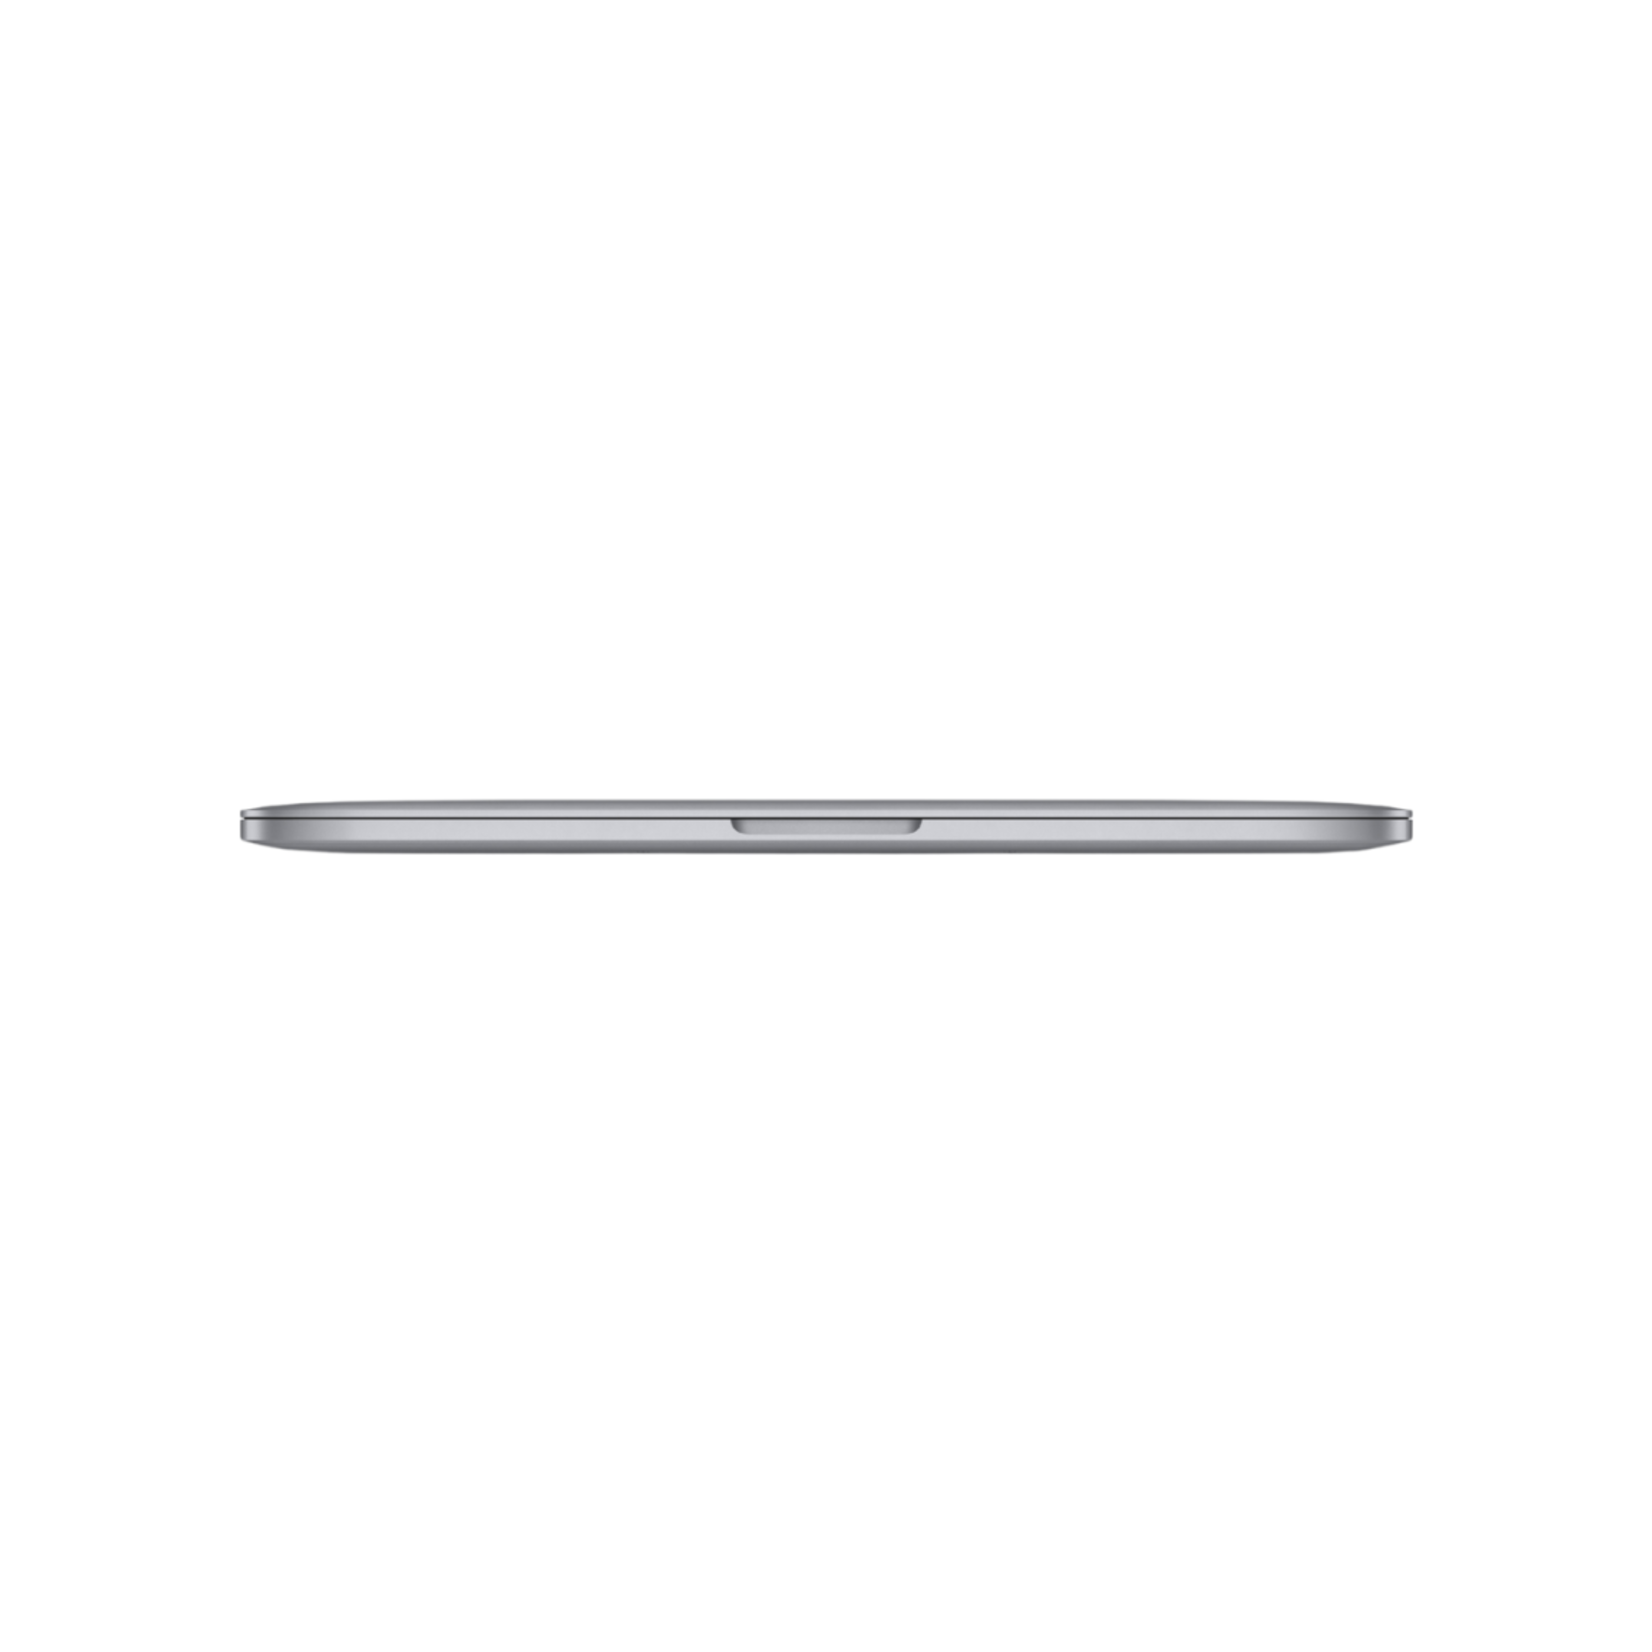 Apple 13-inch MacBook Pro - Space Gray - 256GB